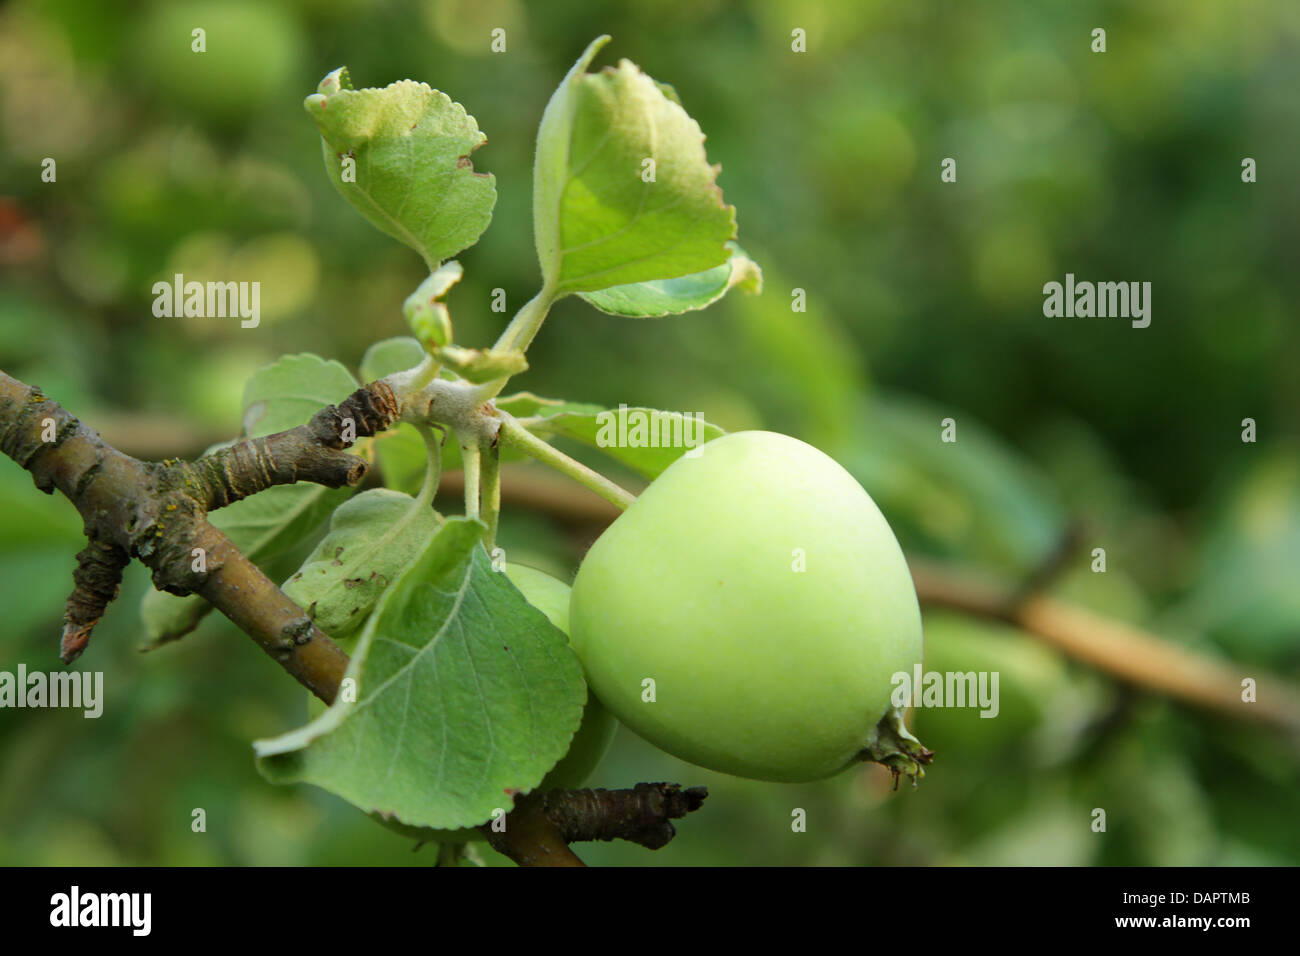 Green apple growing on tree in summer Stock Photo